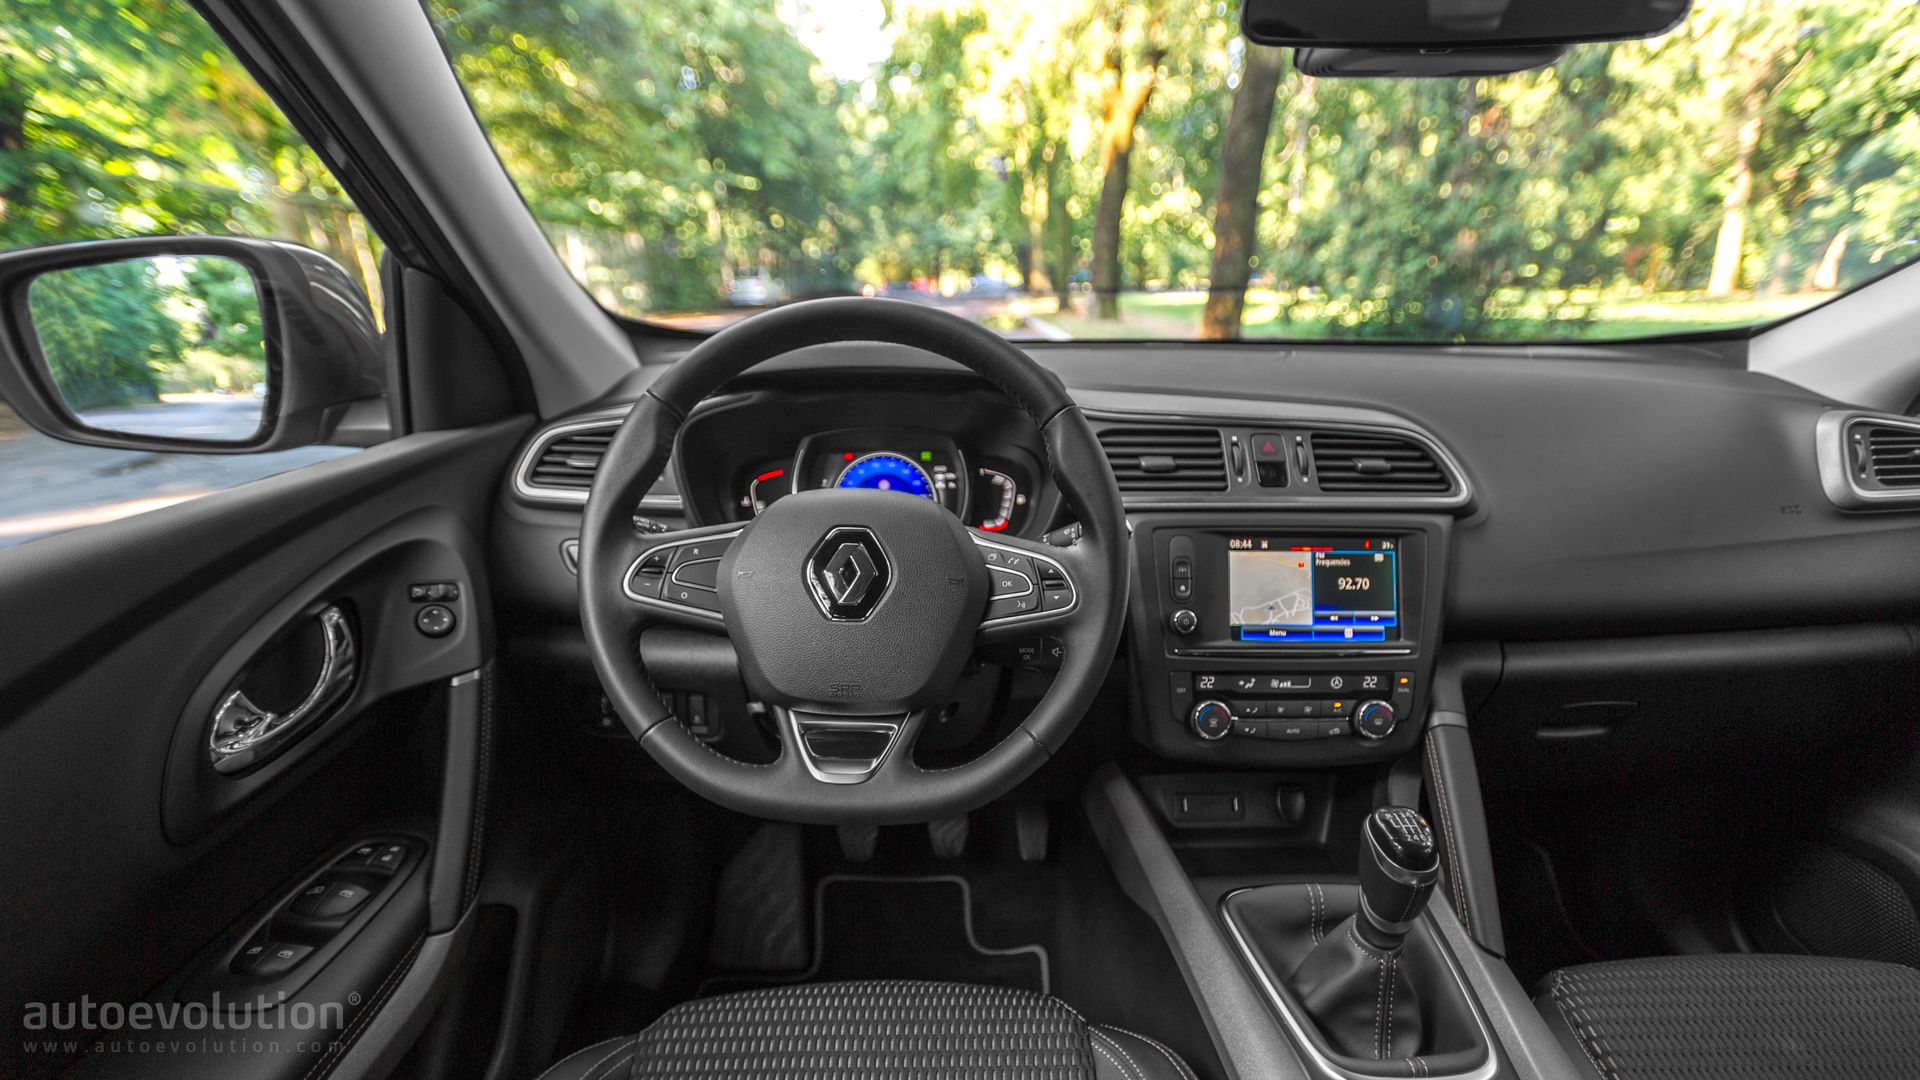 Renault Kadjar 2015-2019 review - Carbuyer 